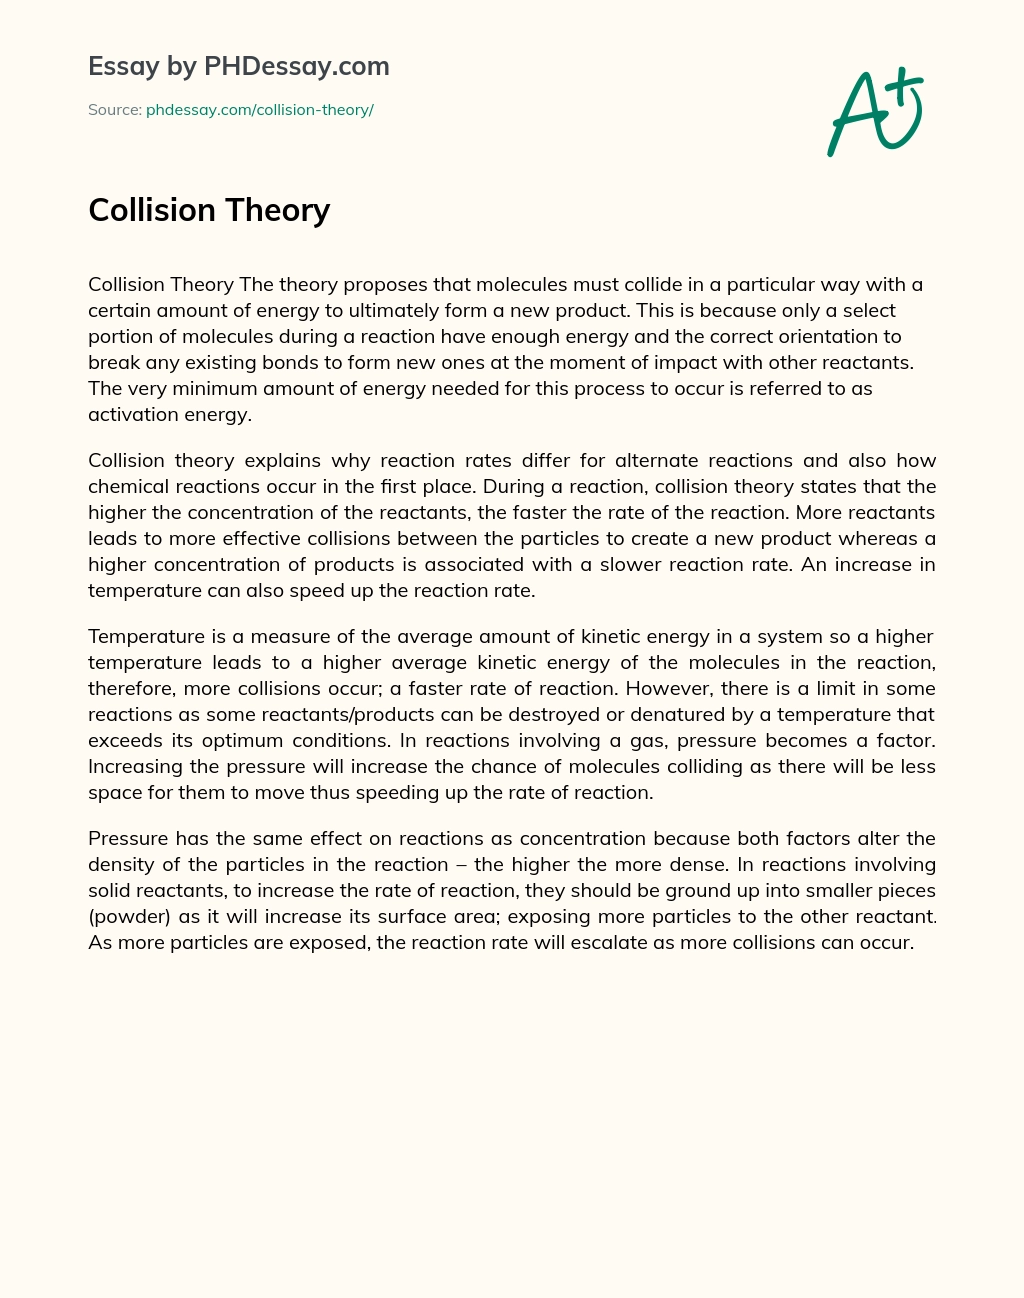 Collision Theory essay